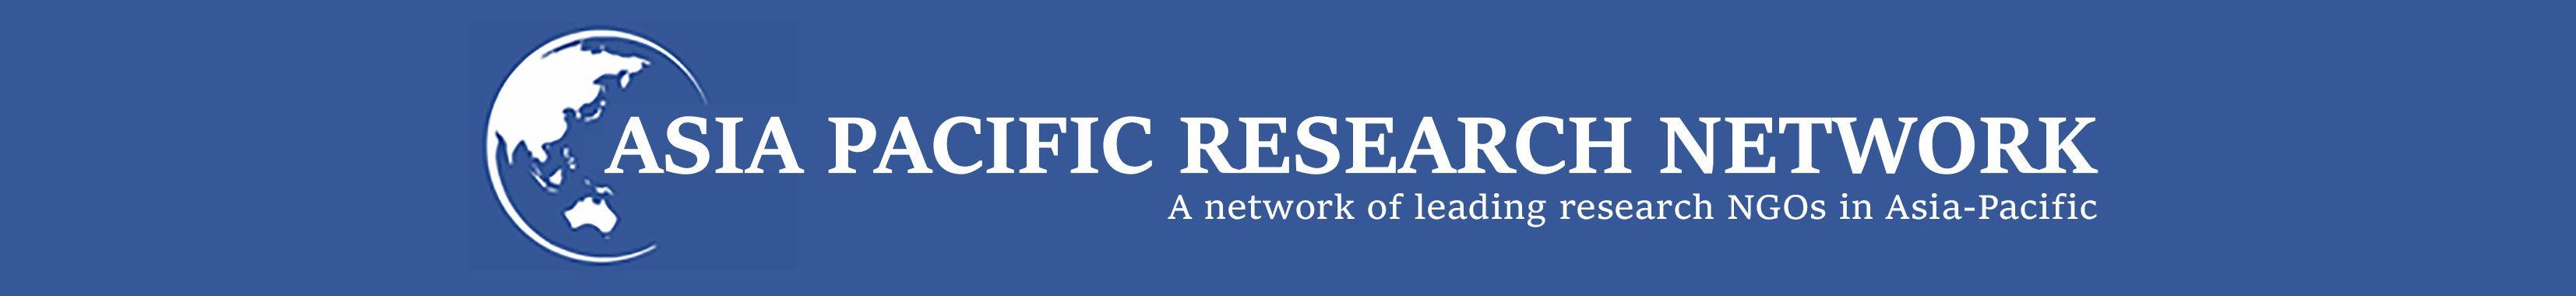 Aprn Logo - Asia Pacific Research Network